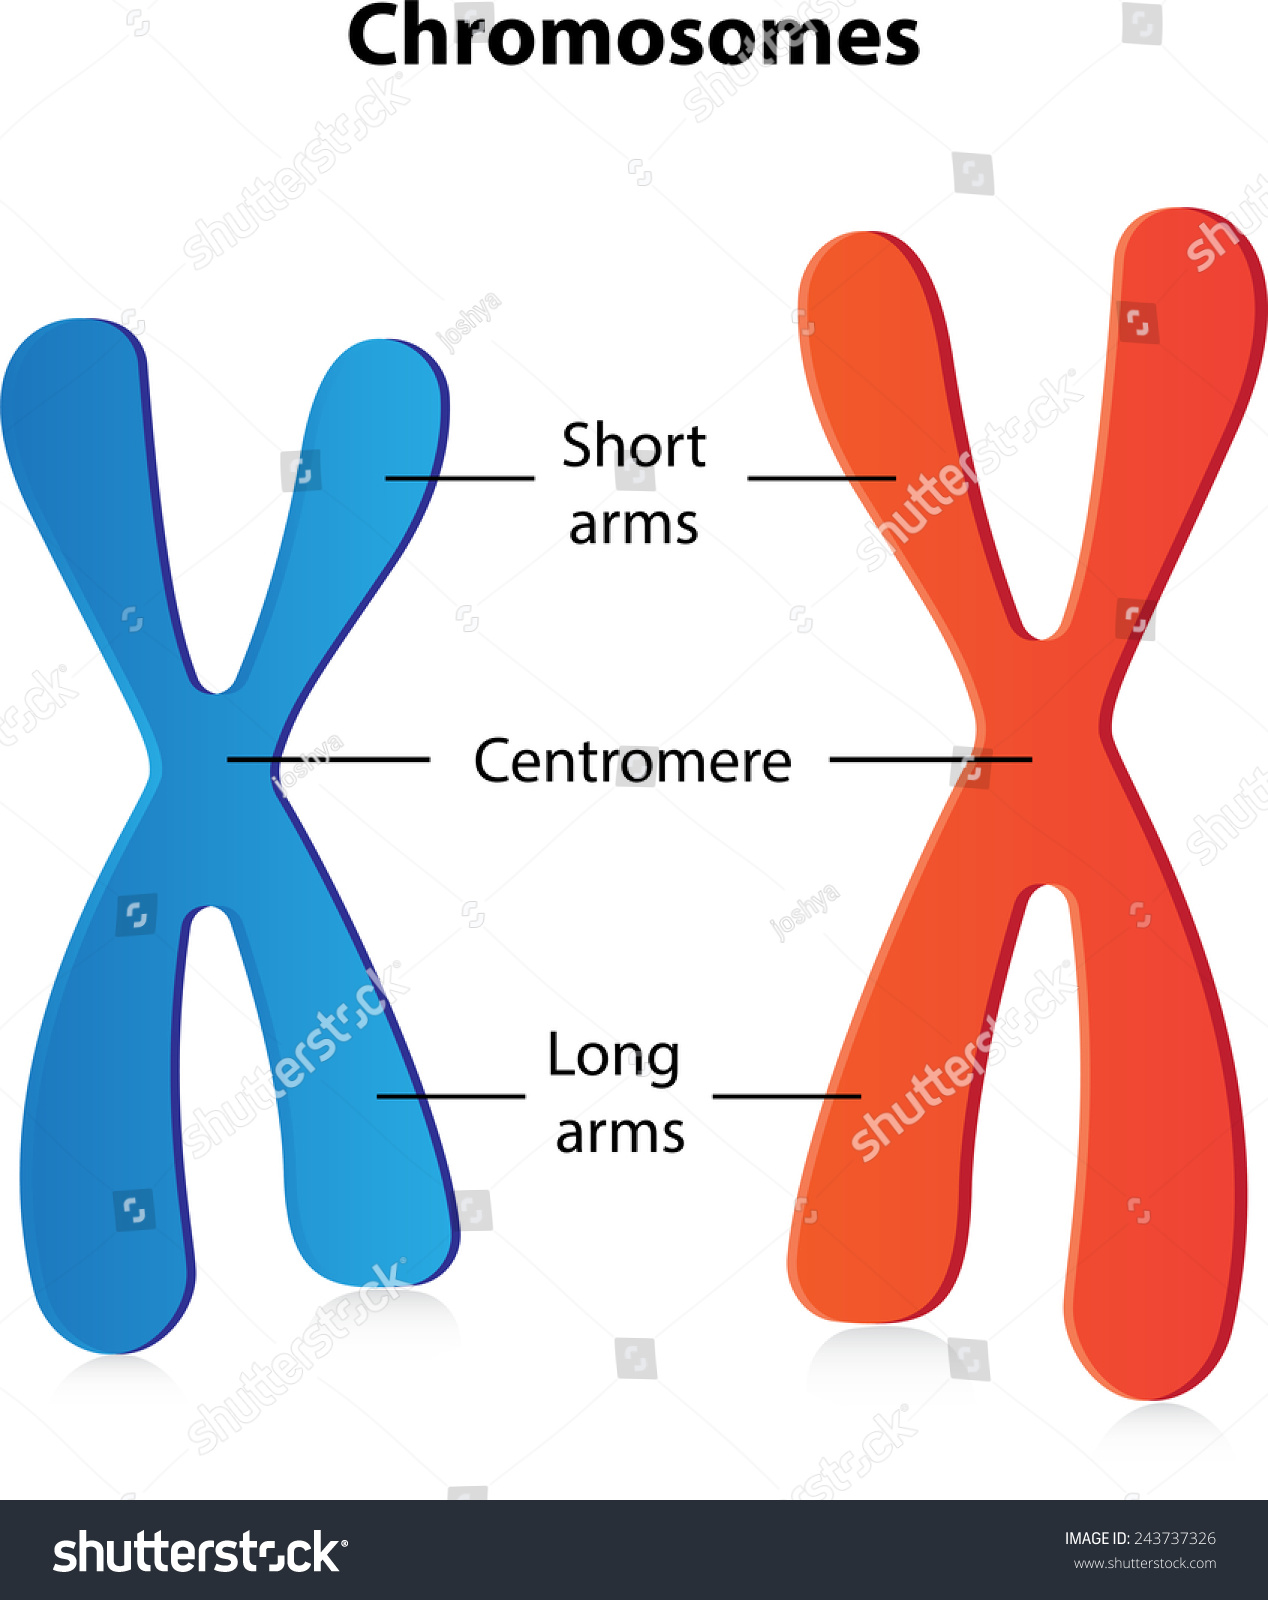 Chromosomes Labeled Diagram Stock Vector Illustration 243737326 ...